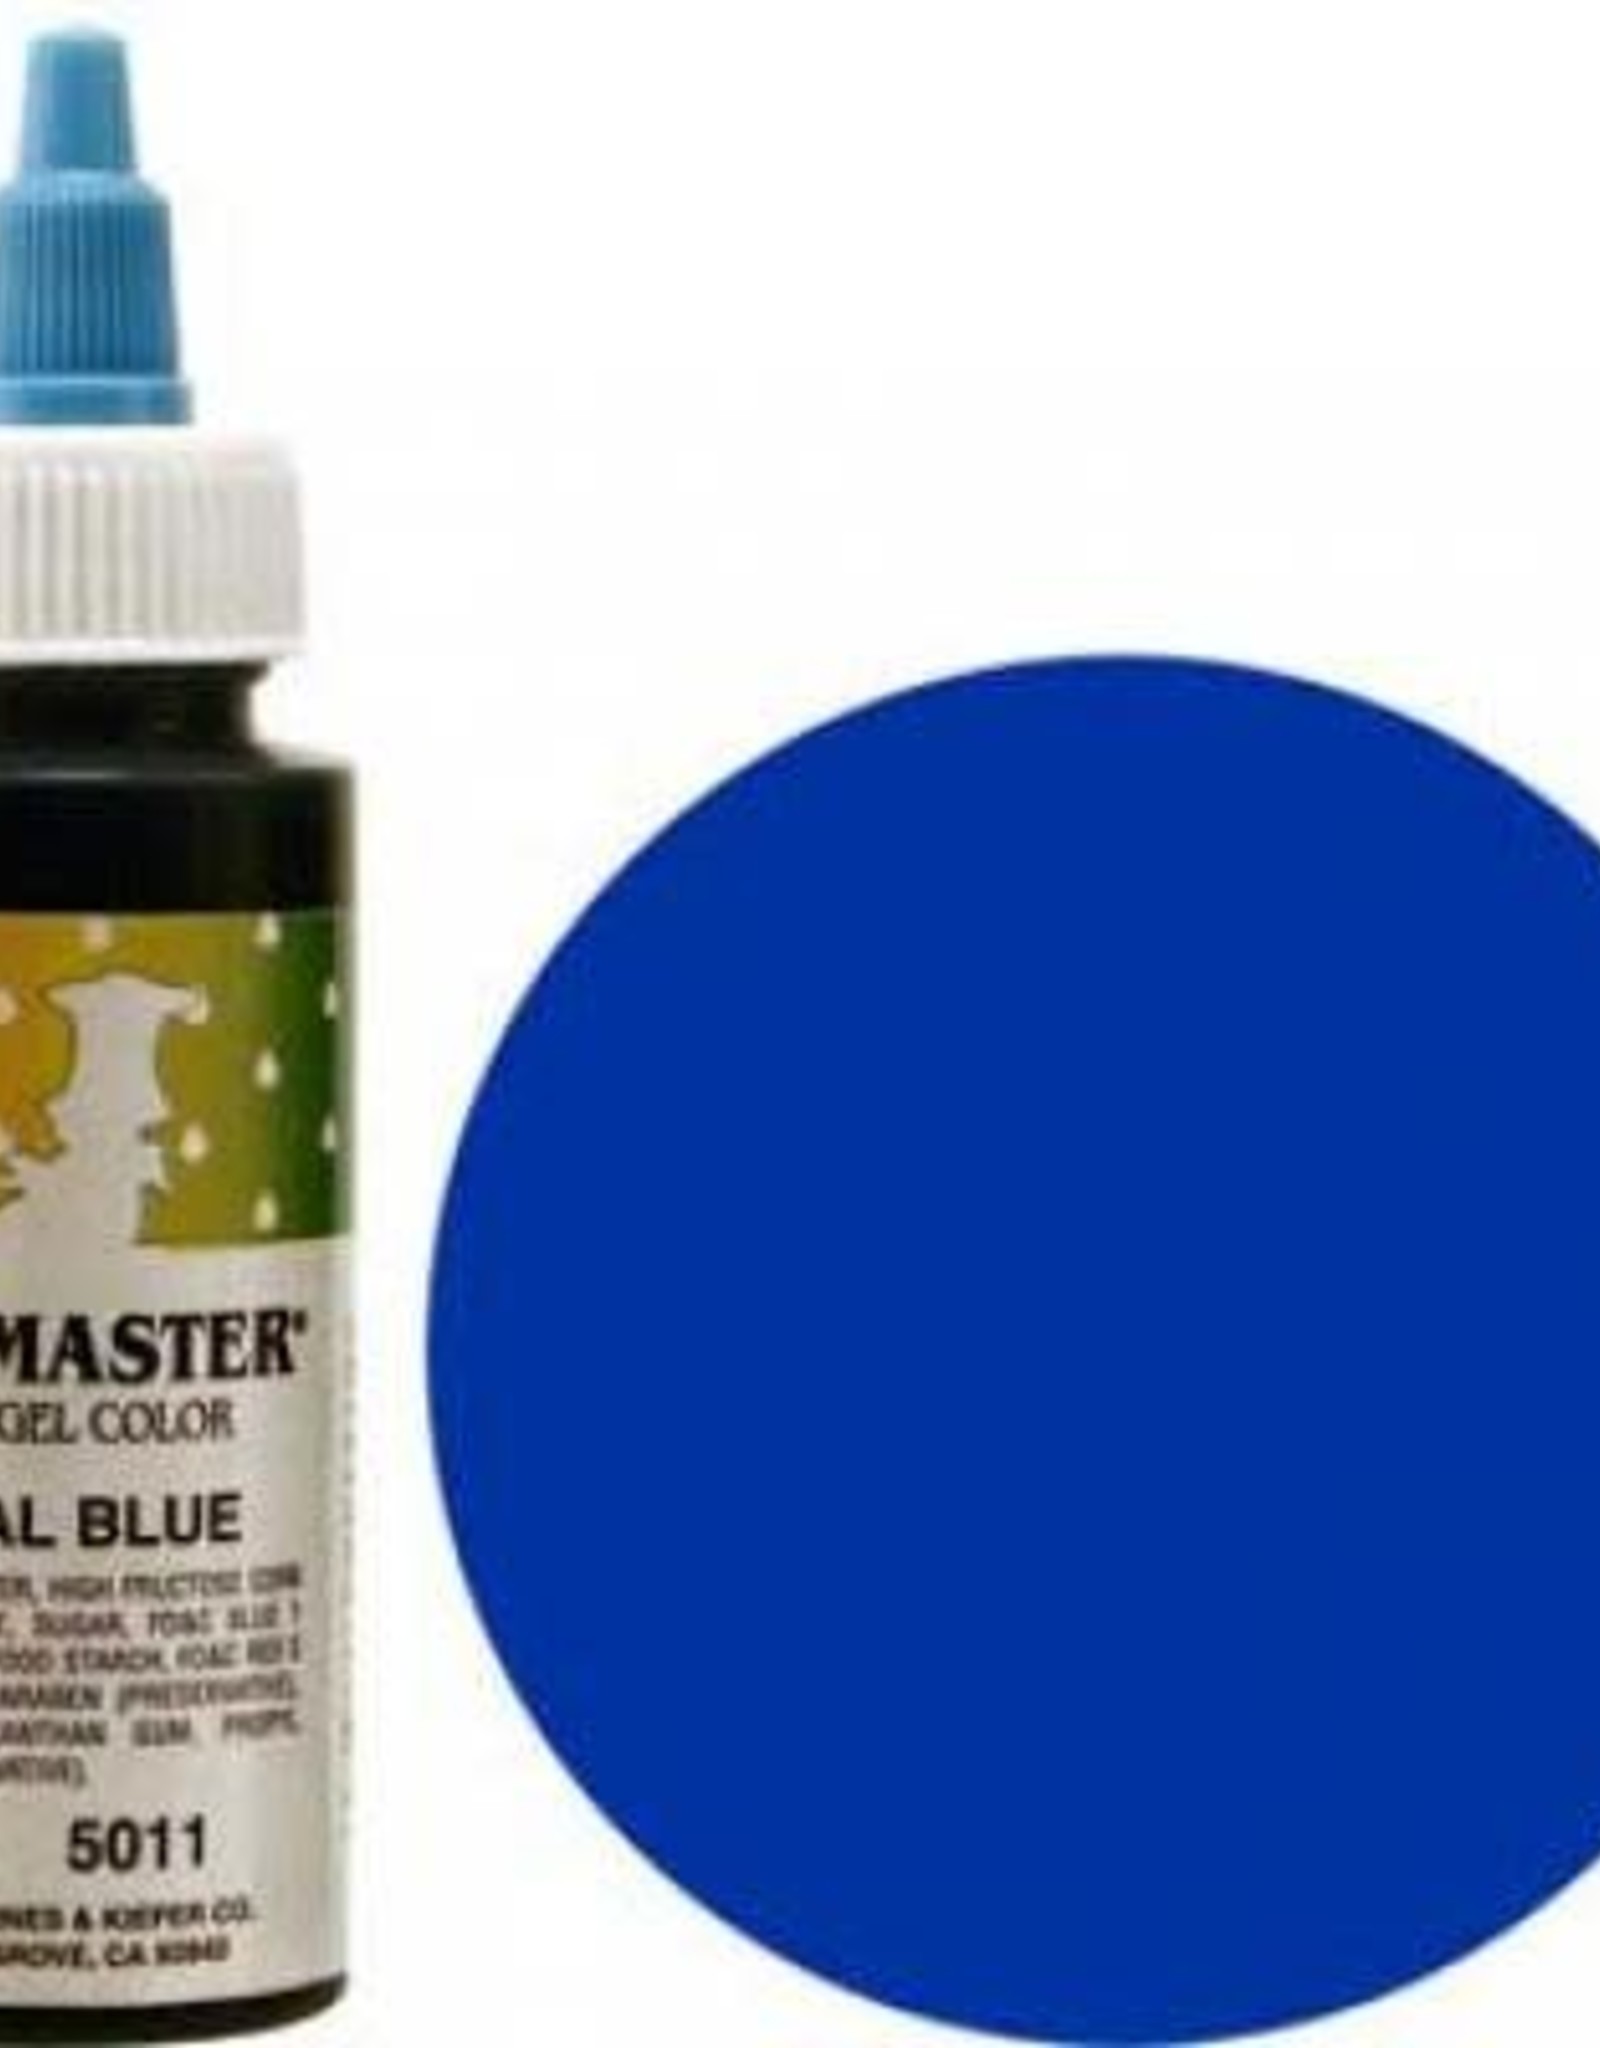 Royal Blue Chefmaster Liqua-gel 2.3 ounce